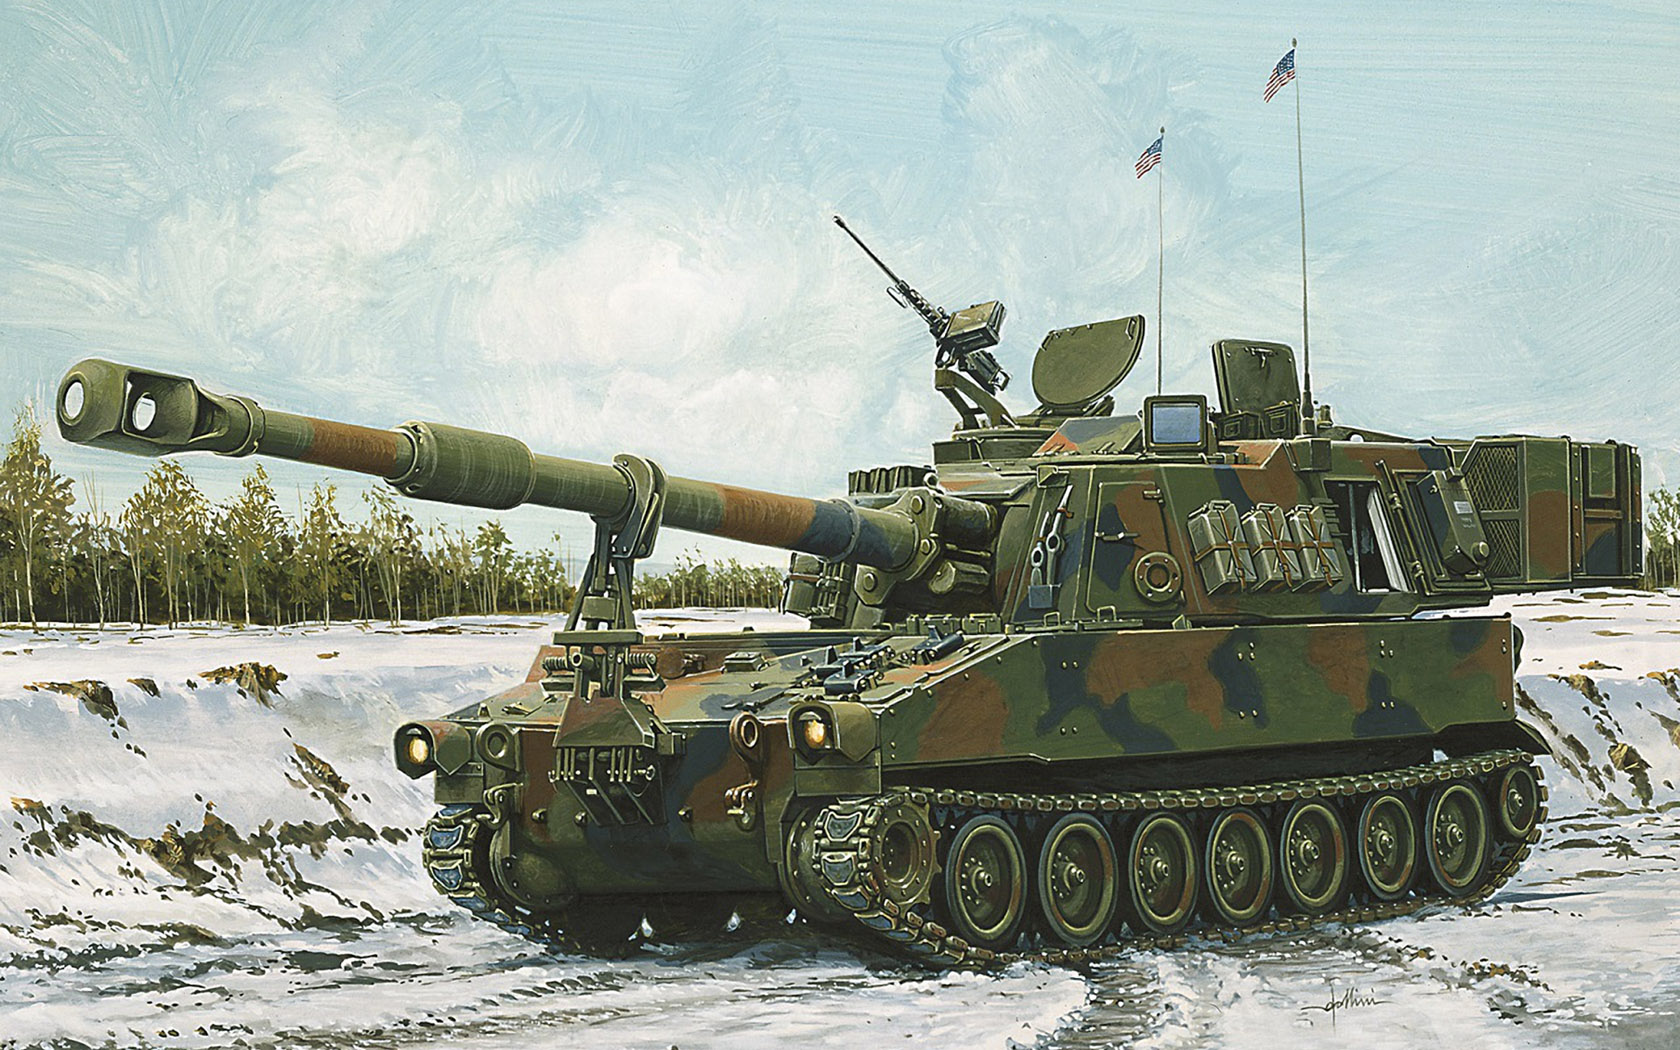 General 1680x1050 tank army military military vehicle artwork gun flag sky clouds